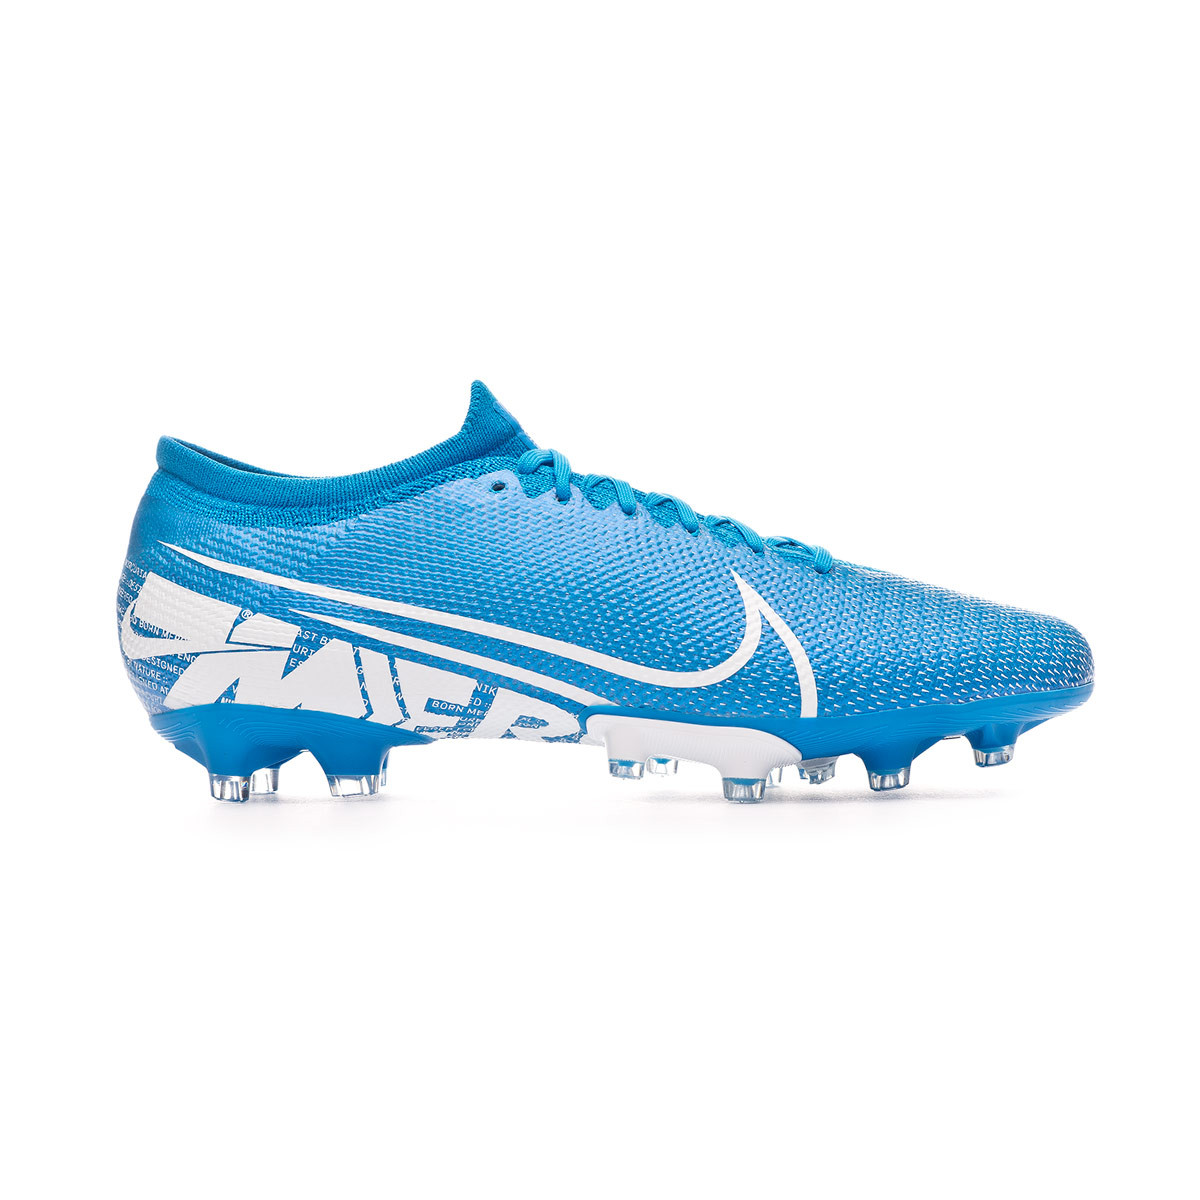 Bota de fútbol Nike Mercurial Vapor XIII Pro AG-Pro Blue  hero-White-Obsidian - Tienda de fútbol Fútbol Emotion